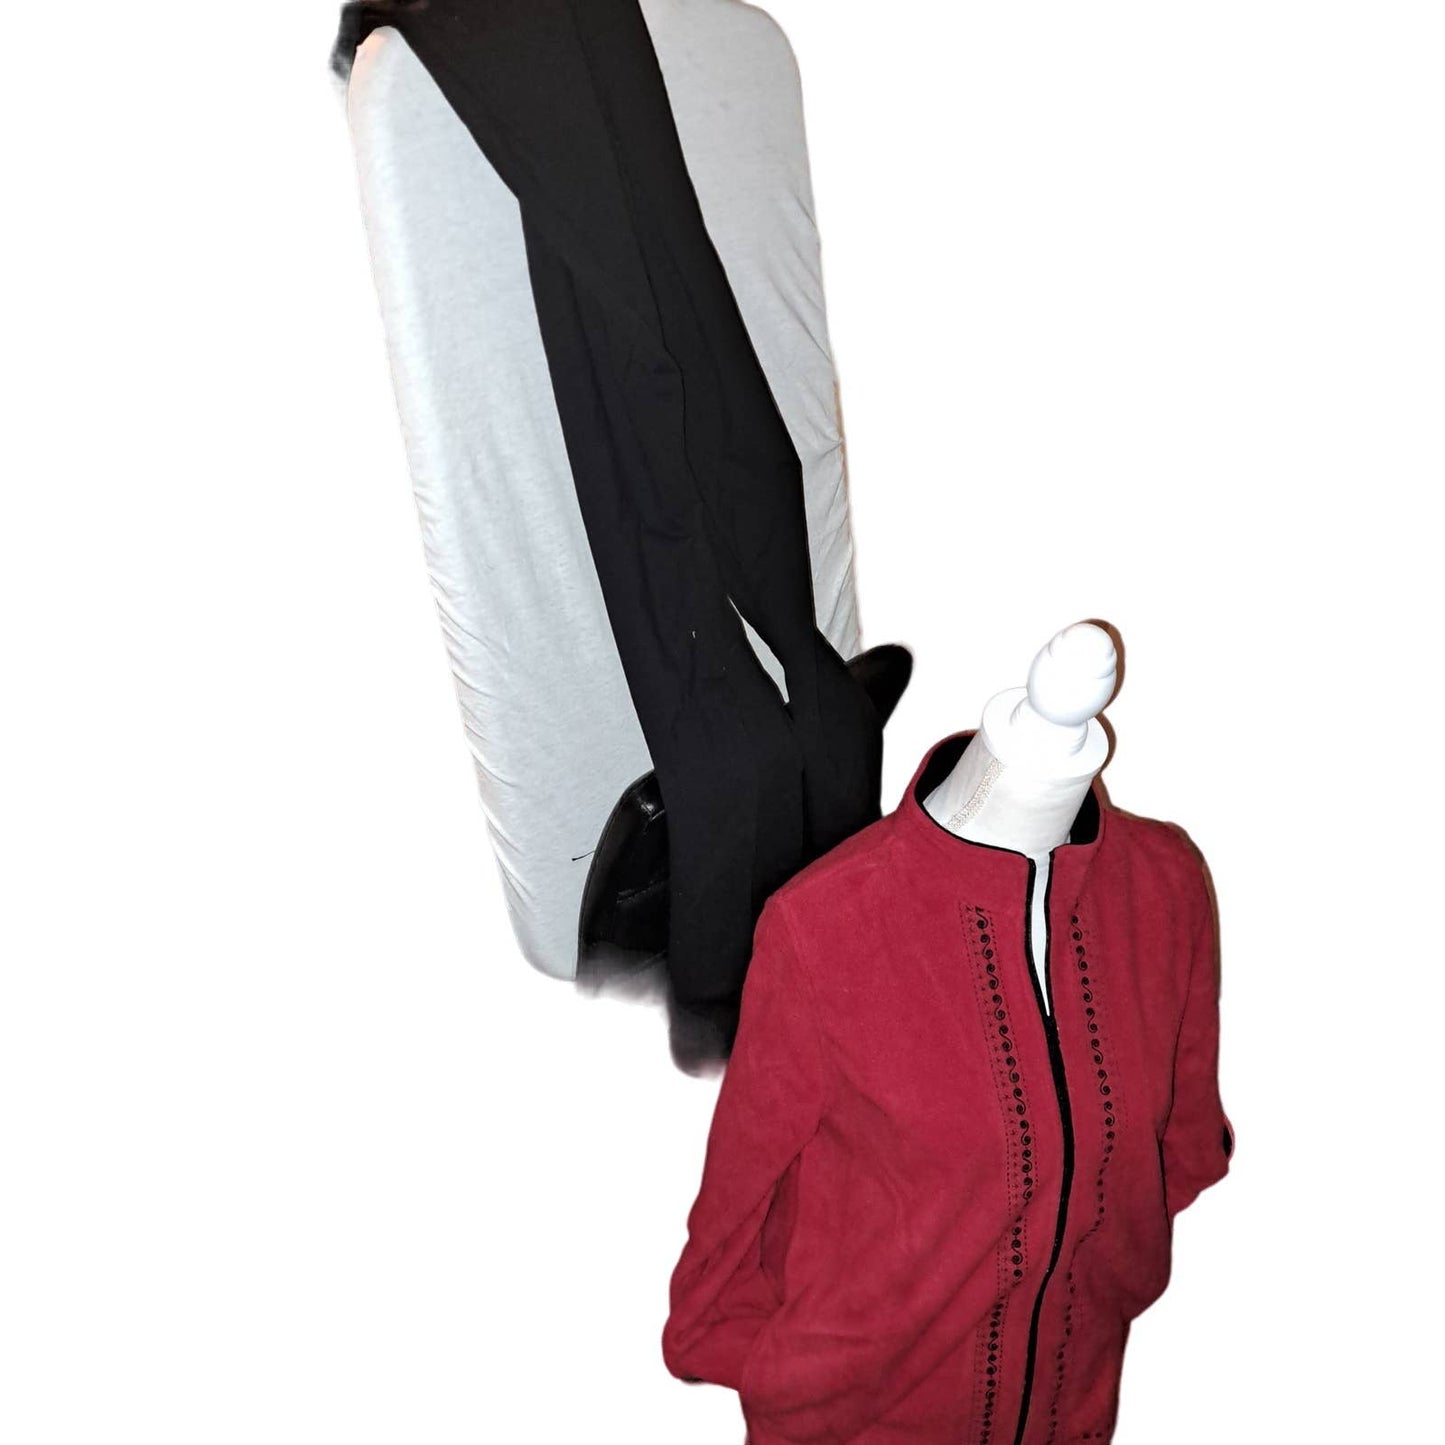 NWT- Sport Savvy Zip Front Fleece Embroidered Trim Warm Up Set Medium, Red/Black